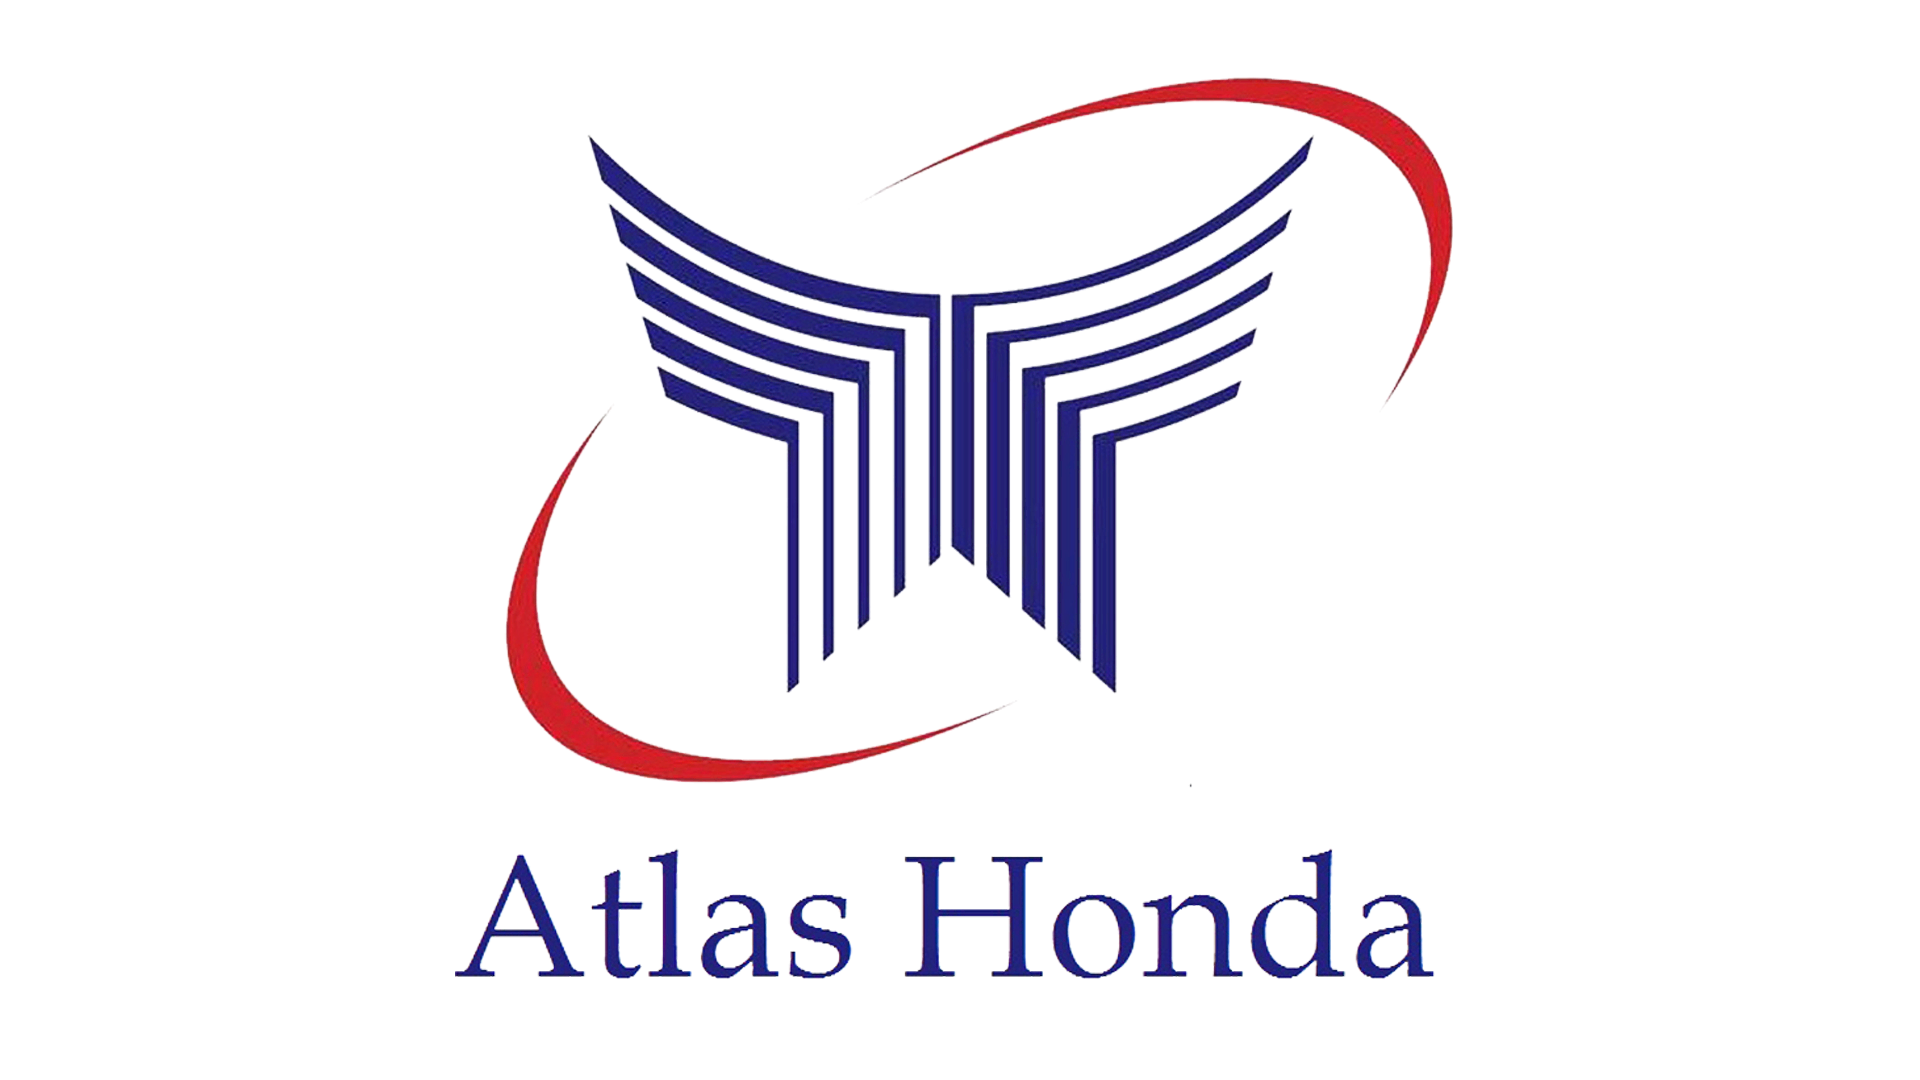 Atlas Honda Motorcycle Logo History And Meaning Bike Emblem